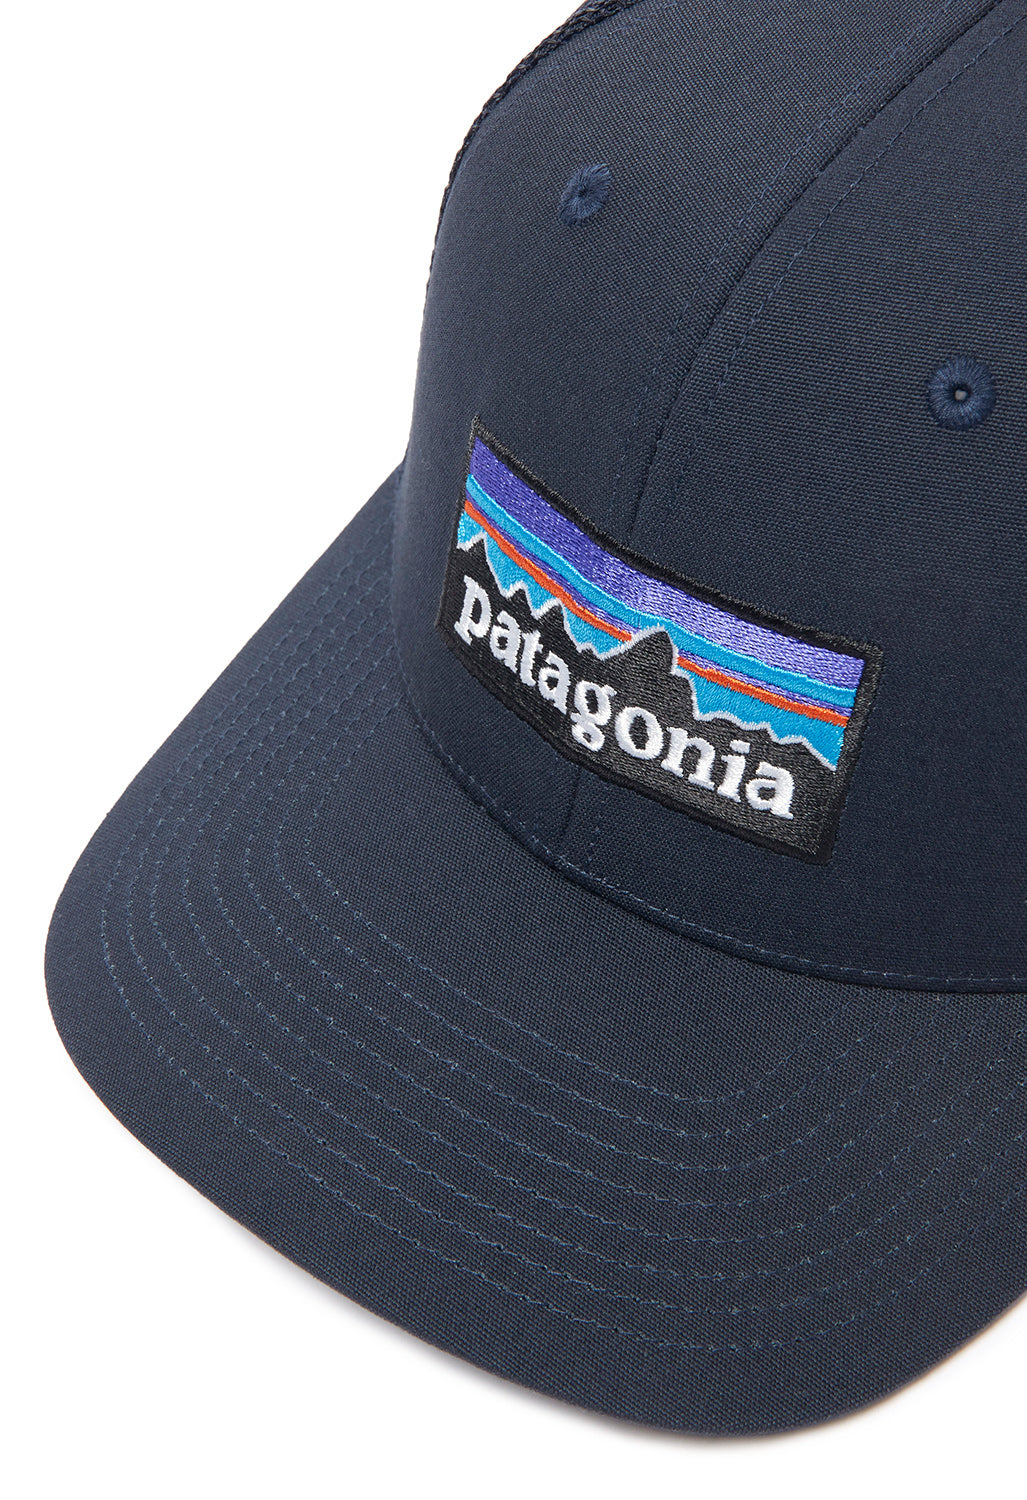 Patagonia P-6 Logo Trucker Hat - Navy Blue